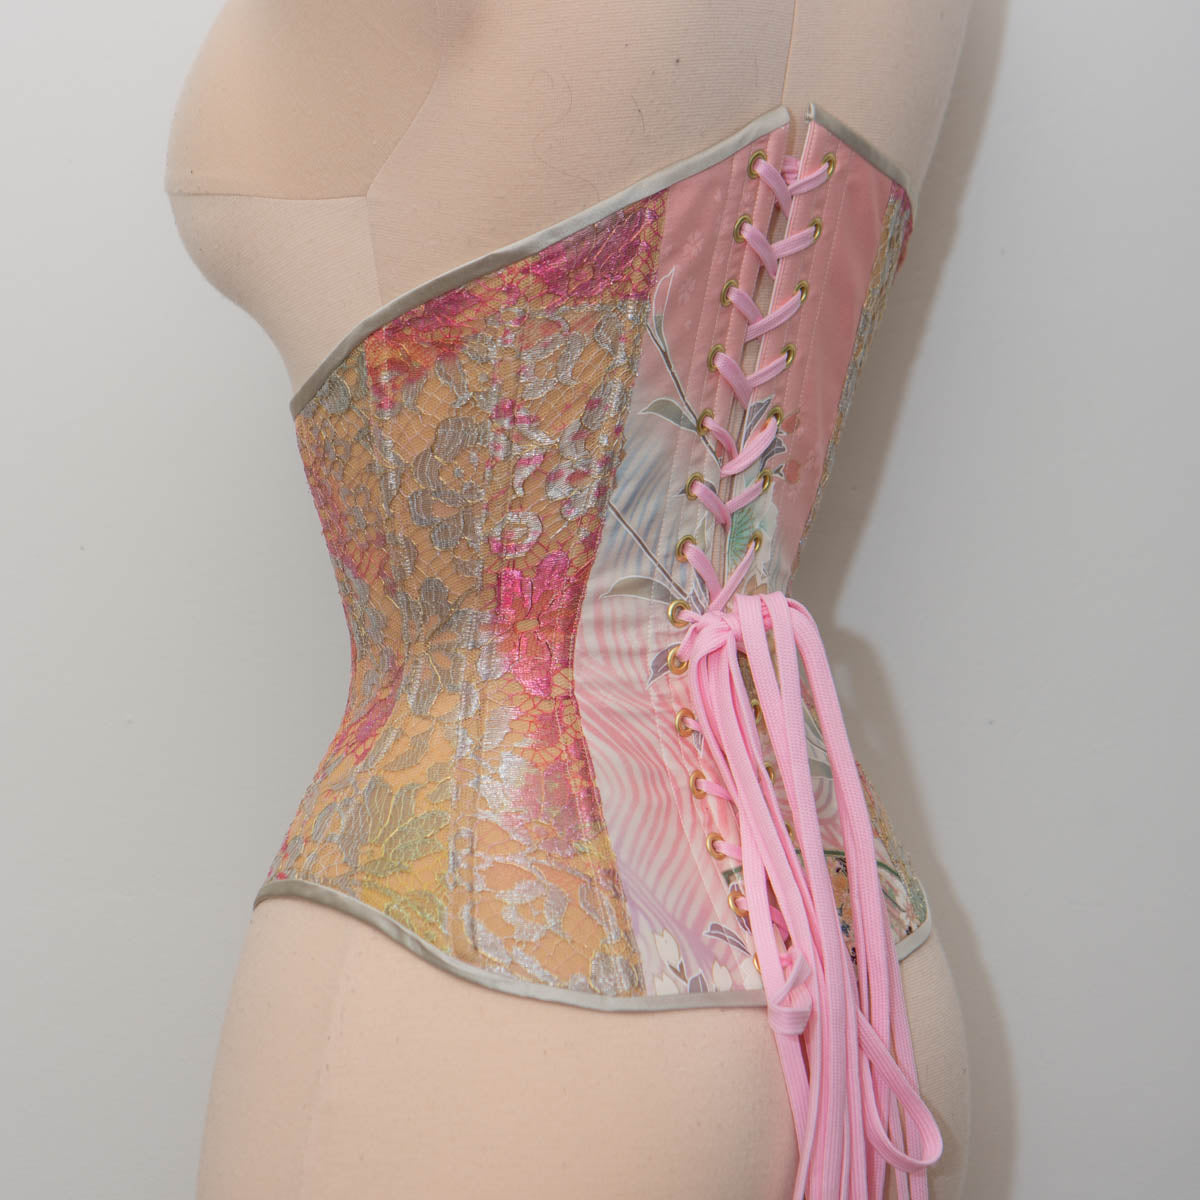 Kimono Silk, Metallic French Lace & Bobbinet Tulle Underbust Corset - 21" Waist